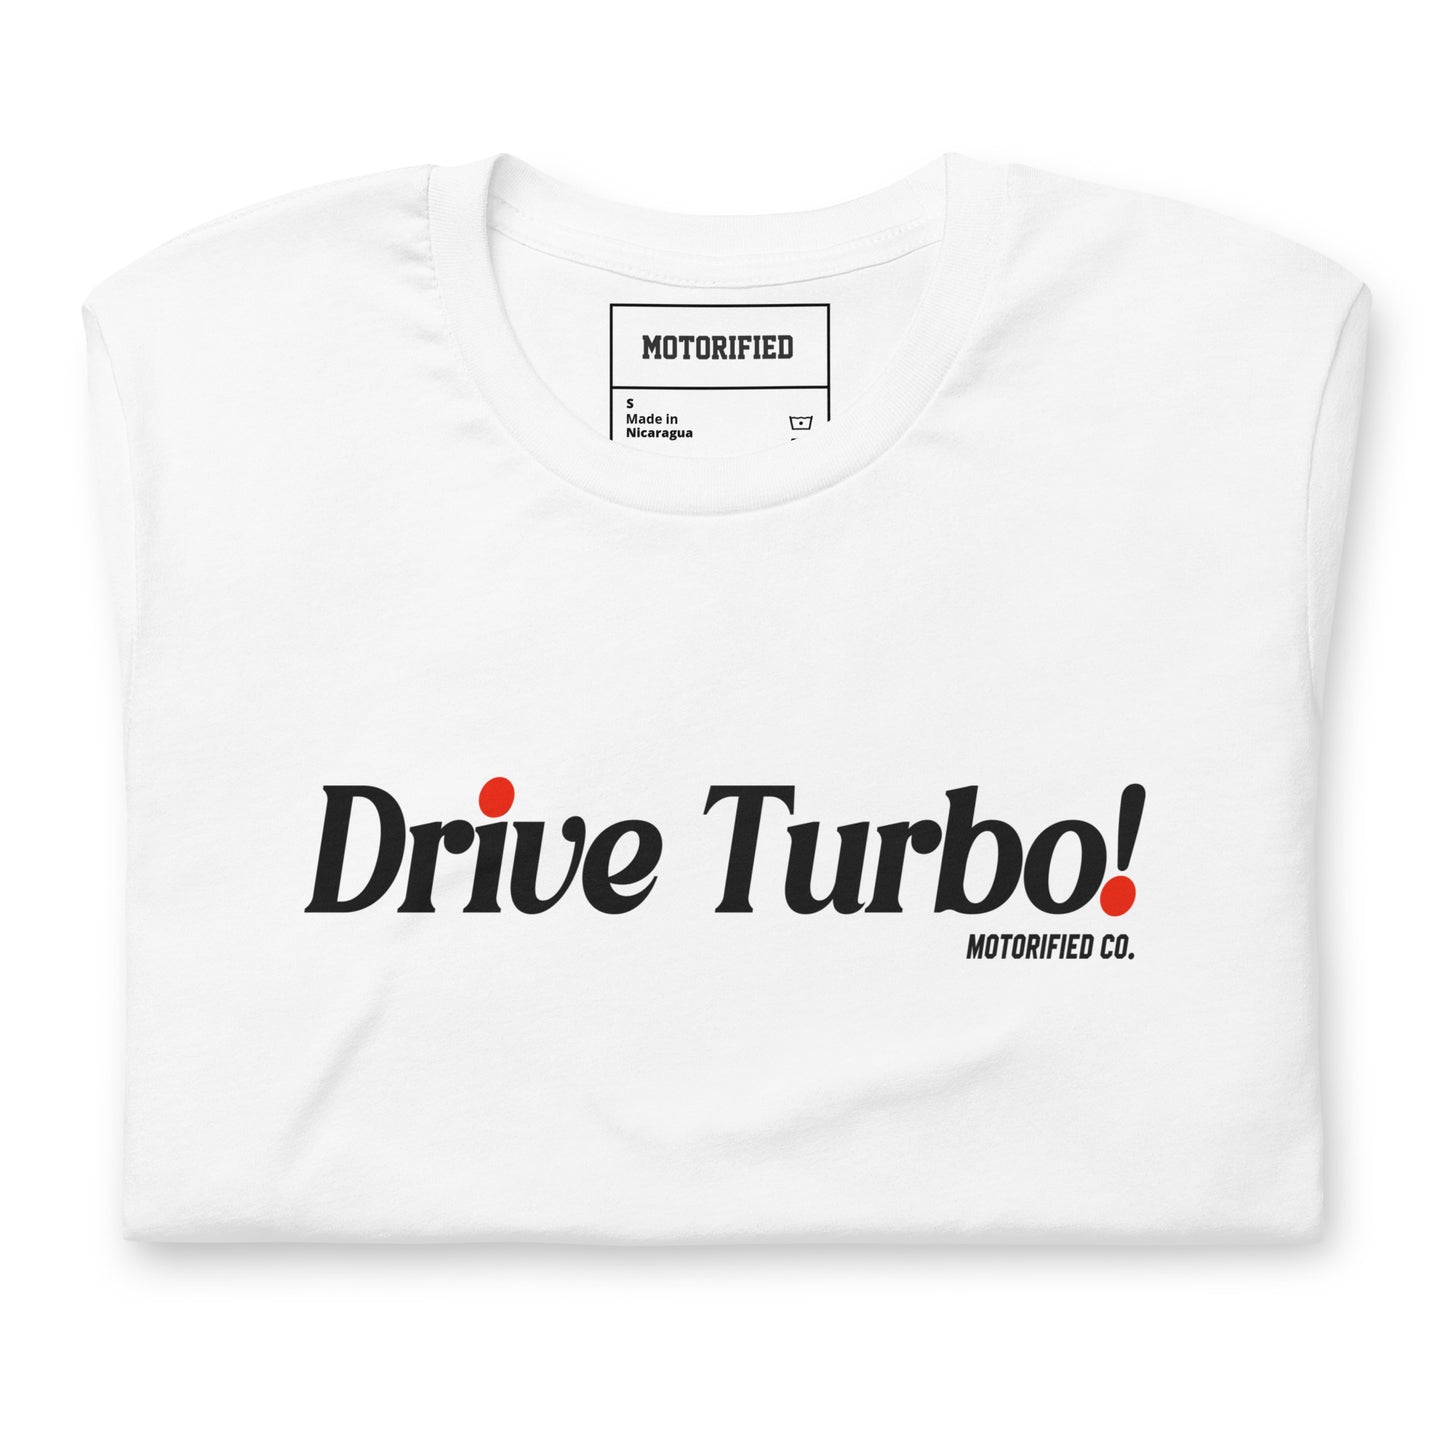 Drive Turbo Petrolhead t-shirt